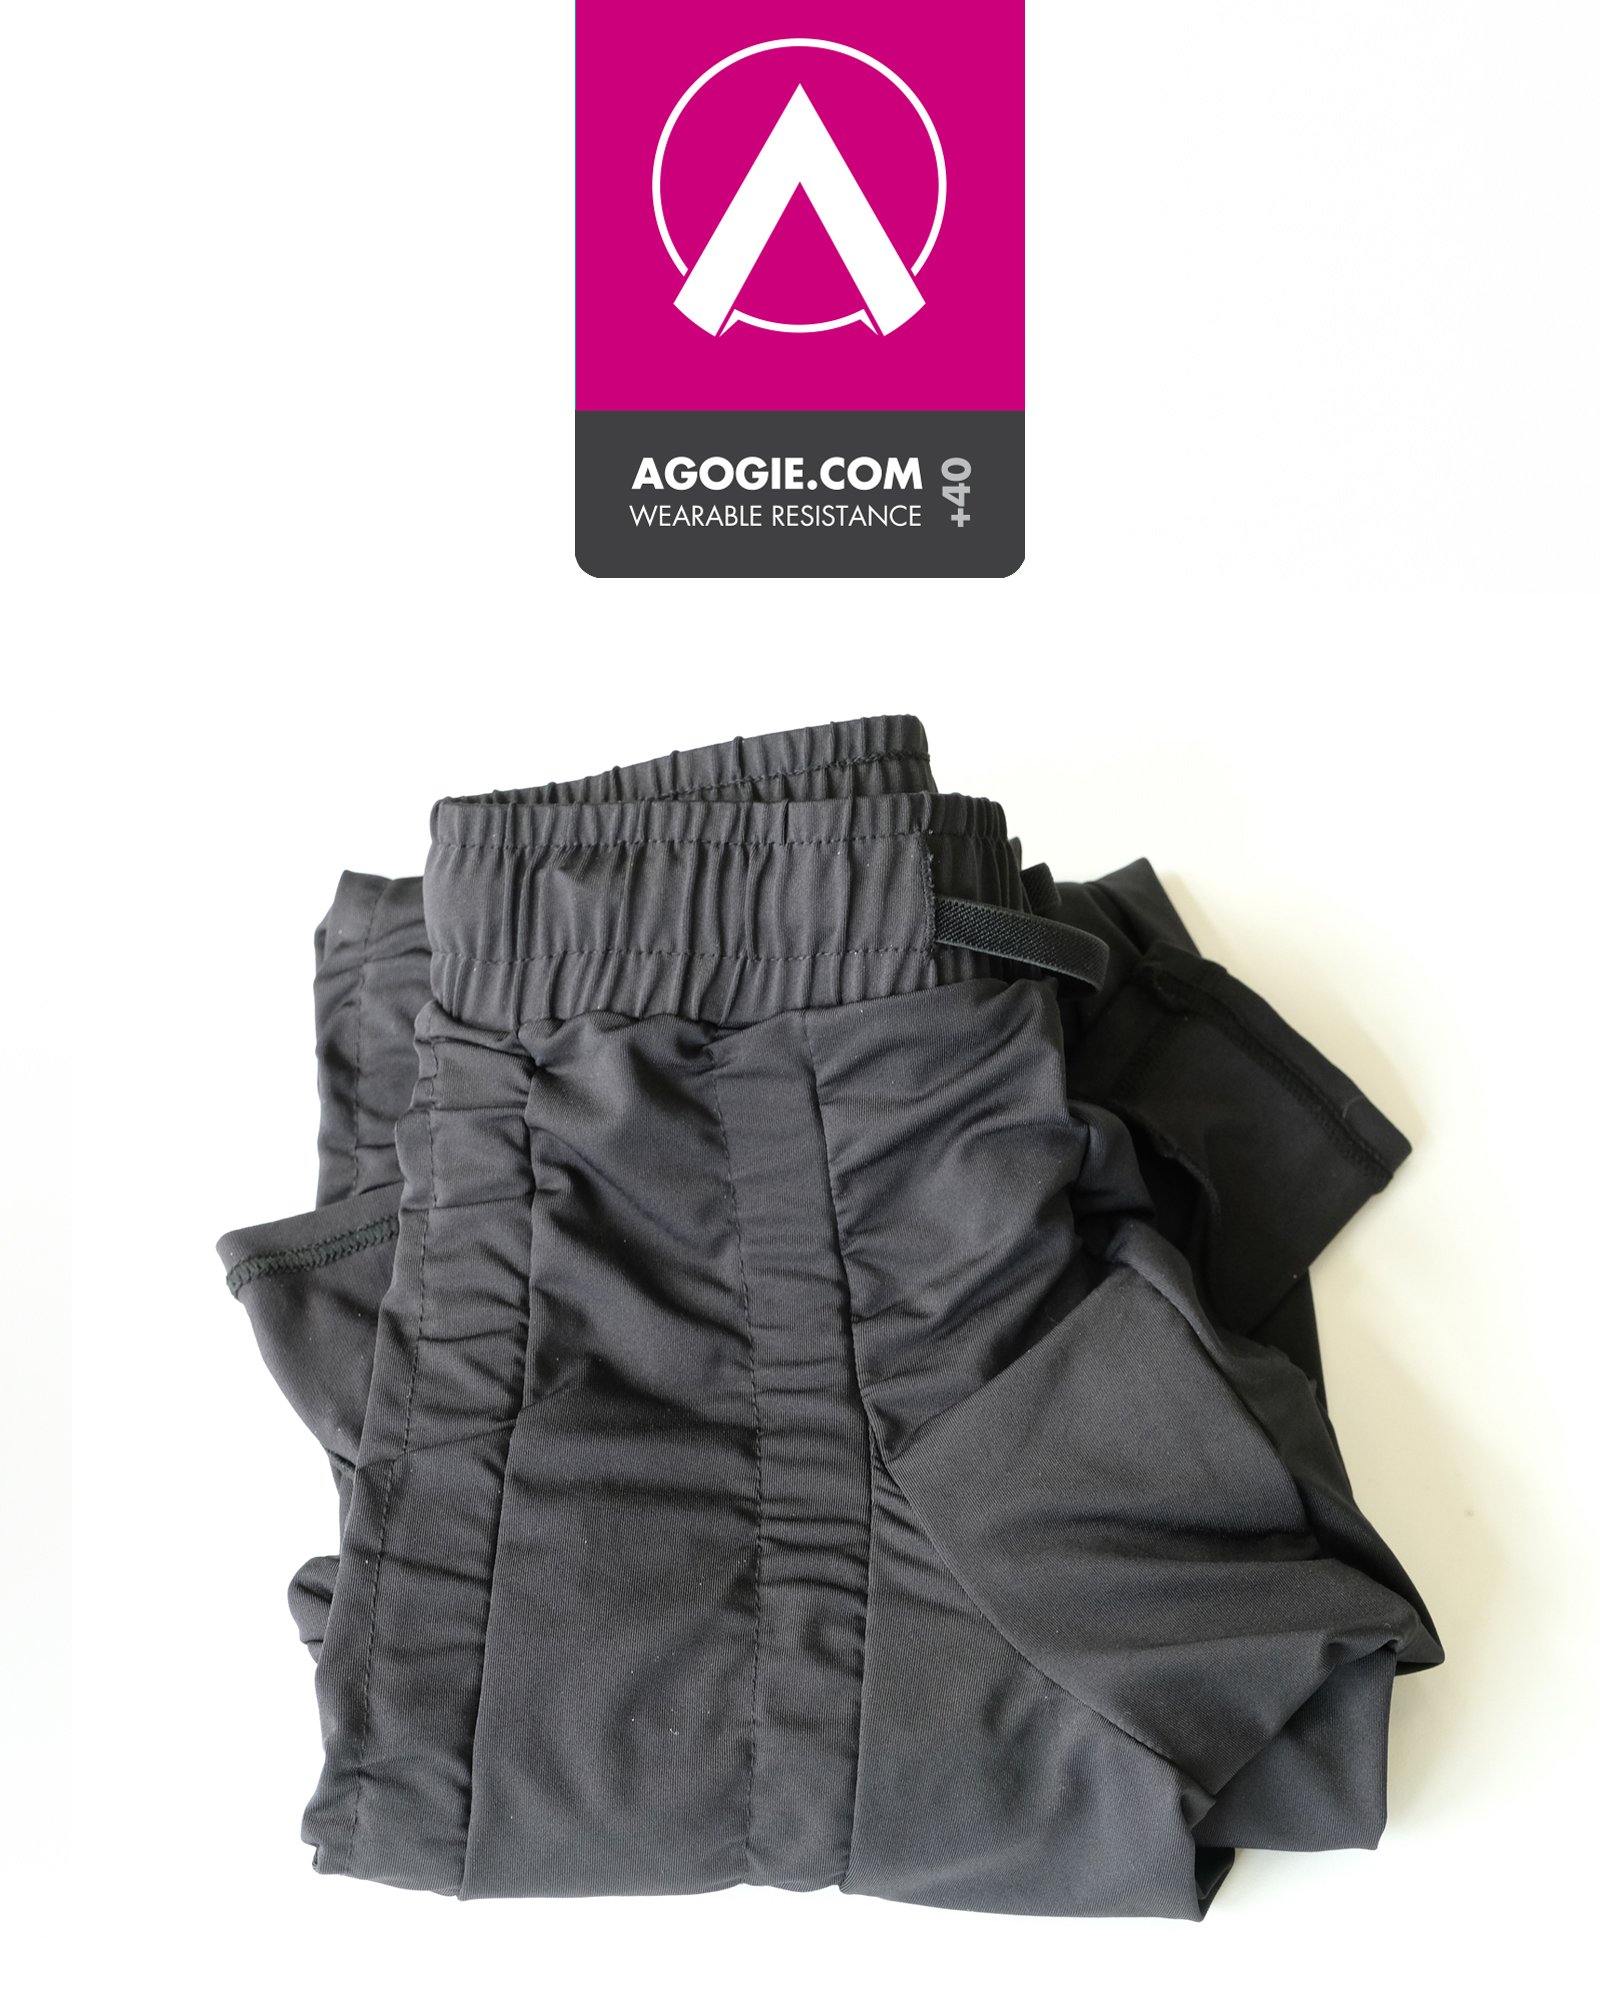 Petite Women's +40 Resistance Pants by AGOGIE